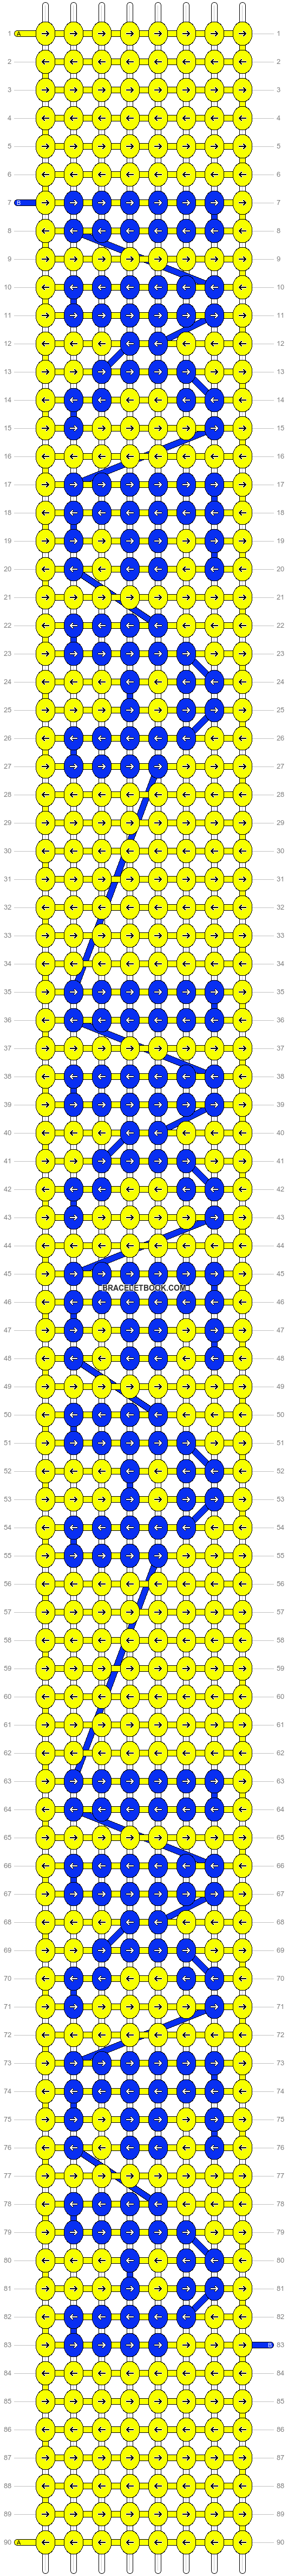 Alpha pattern #27305 variation #11306 pattern